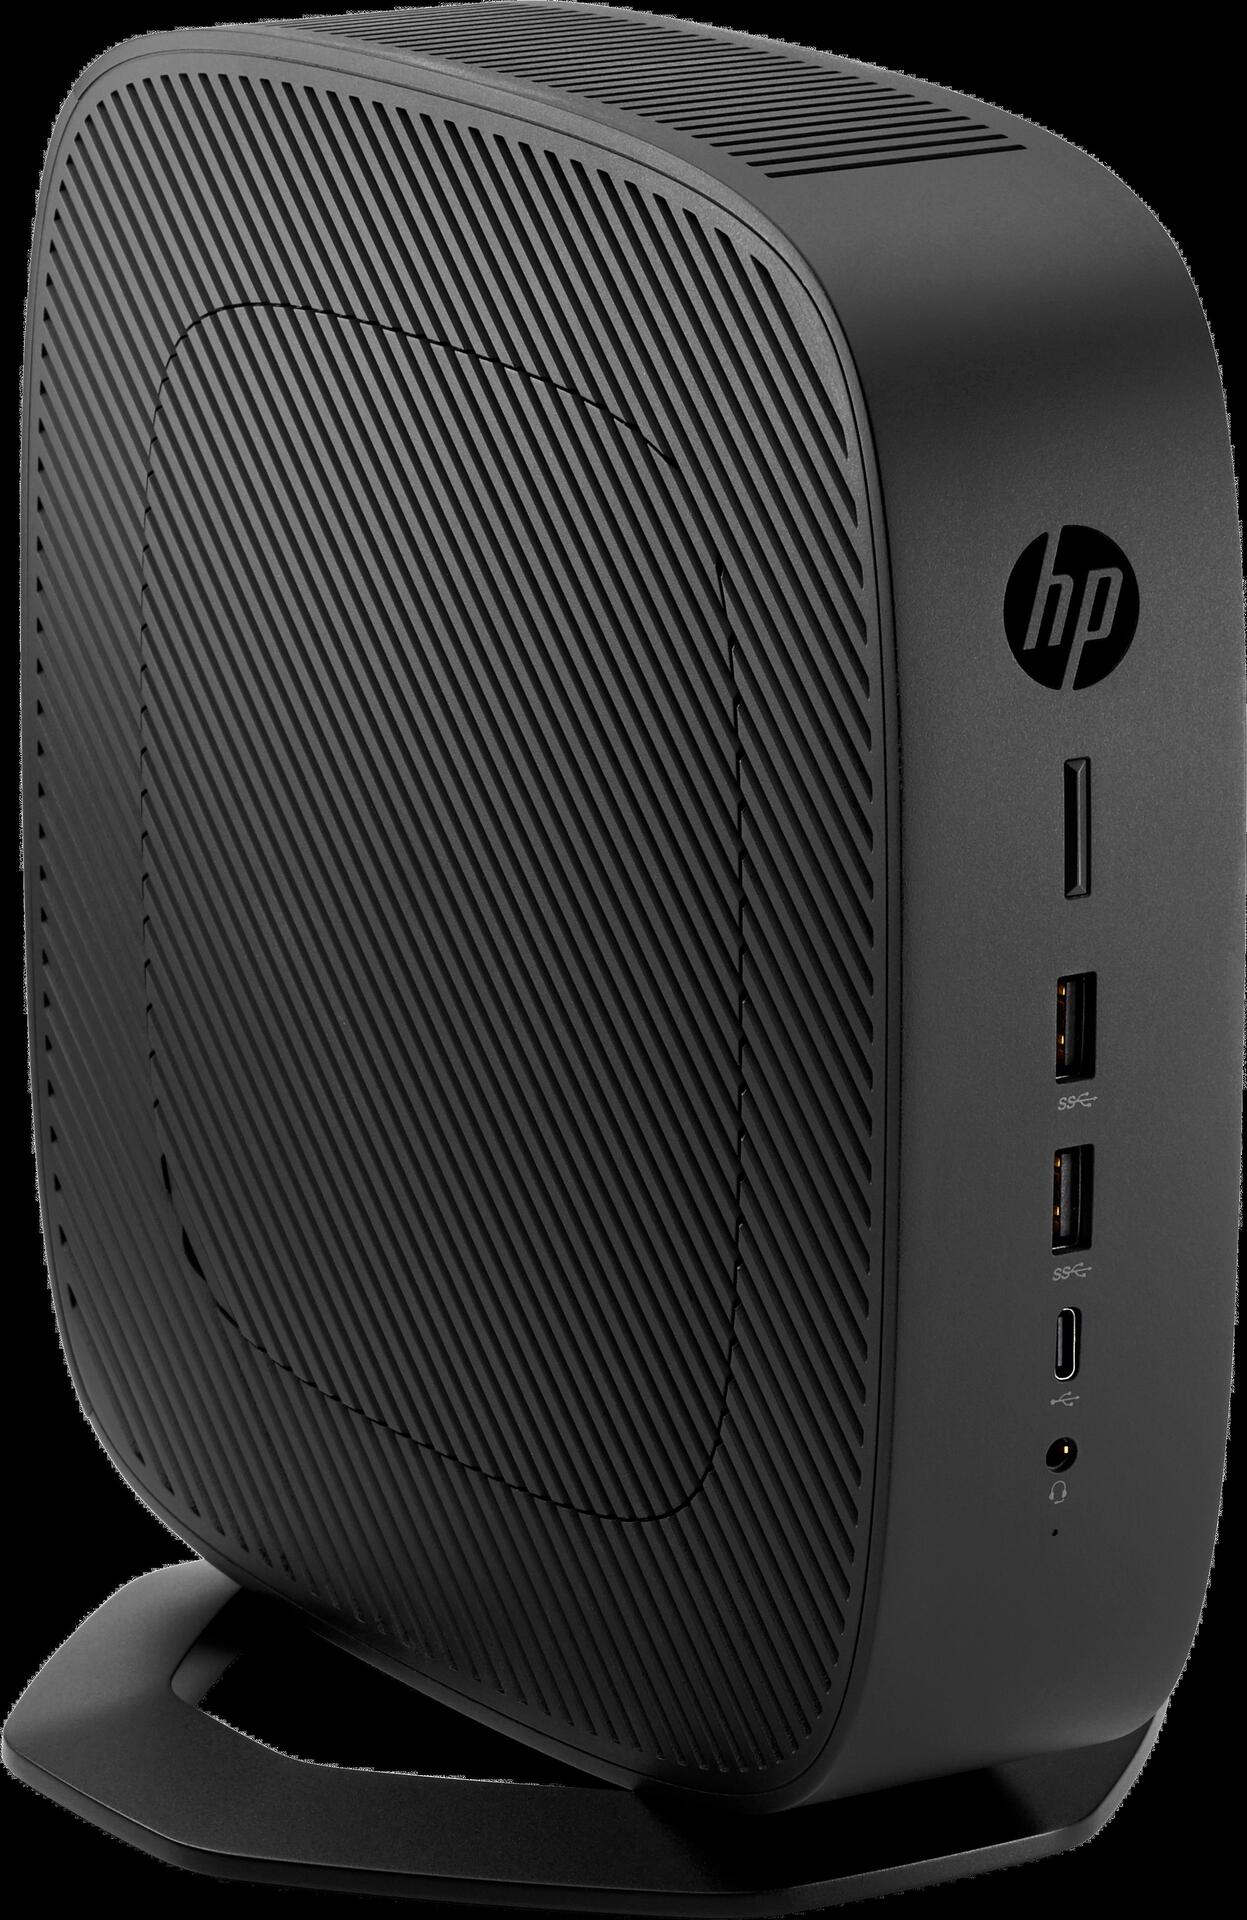 HP t740 Thin Client (6TV52EA#ABD)